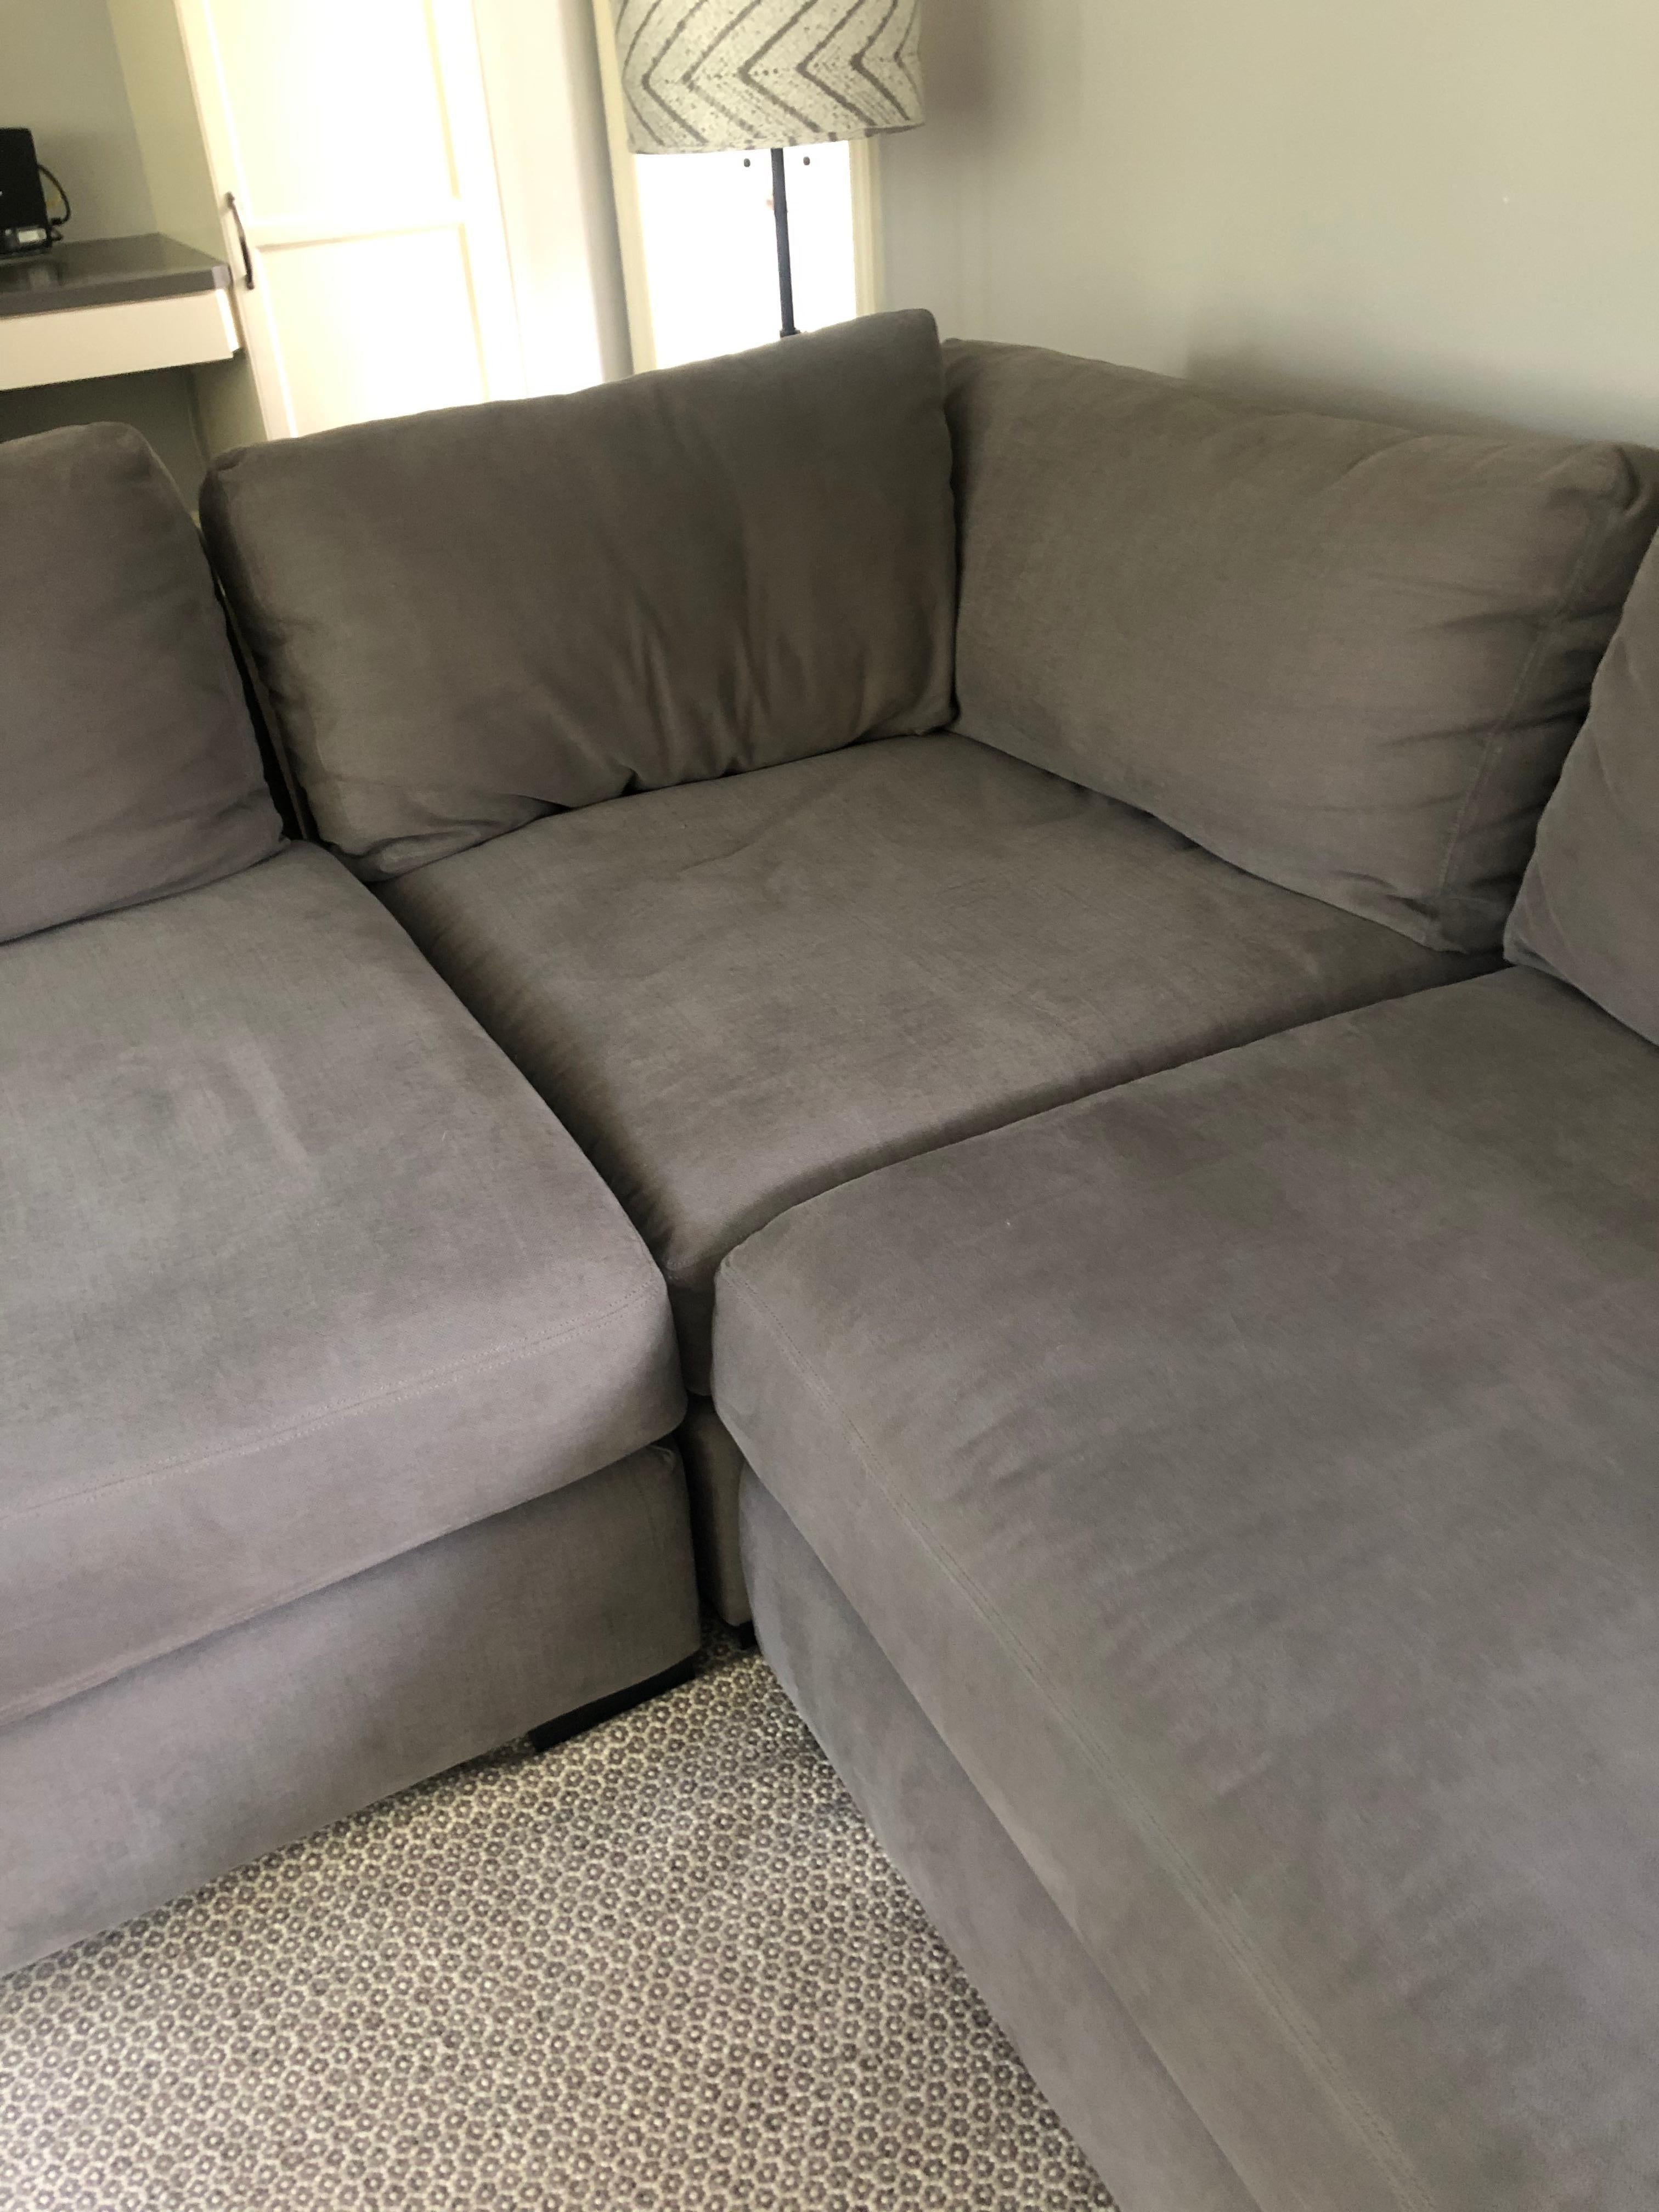 Super Comfy Family Room Sectional Sofa 1